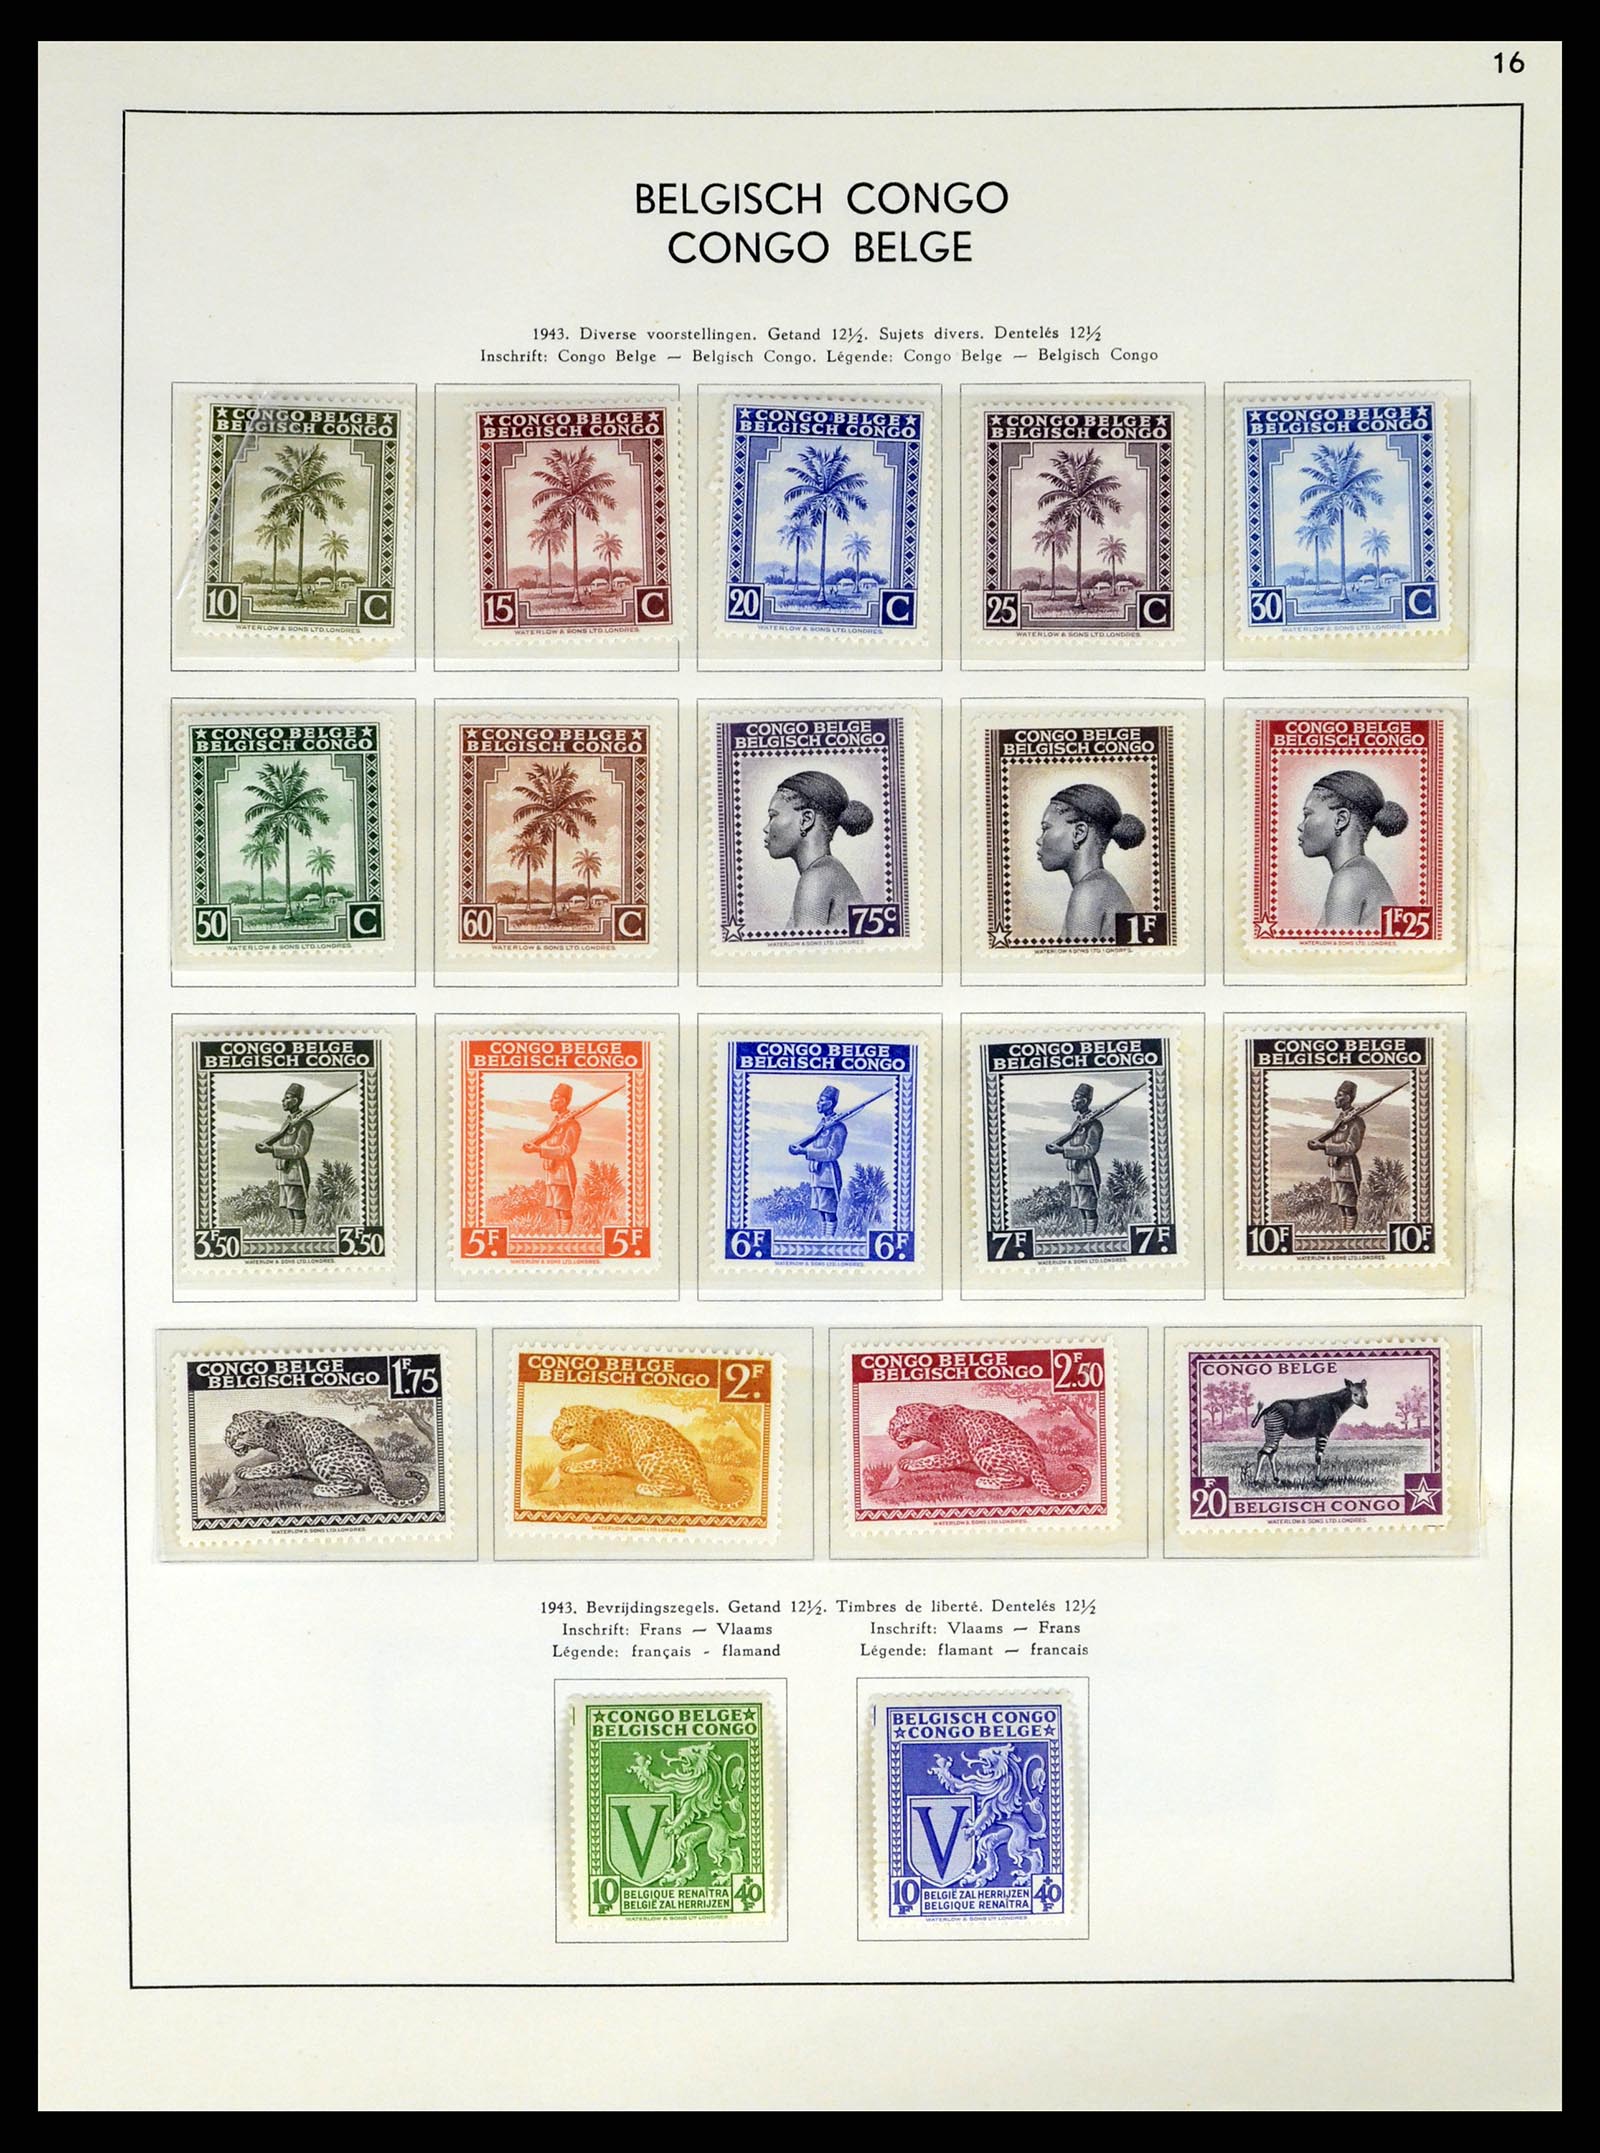 37959 171 - Stamp Collection 37959 Belgium and Belgian Congo 1849-1960.